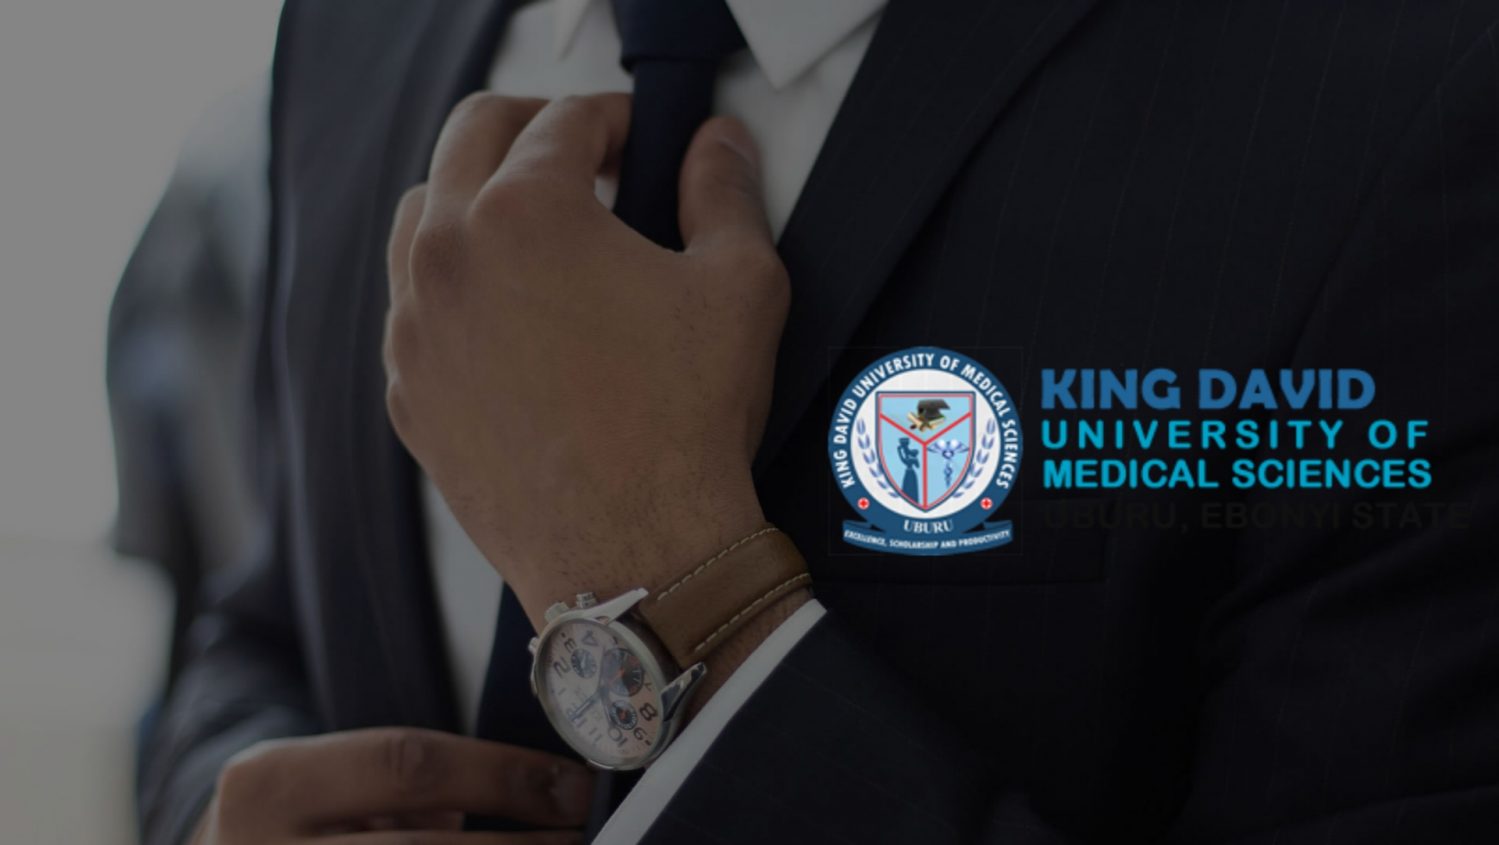 Study In Nigeria: 2022 KDSG Medical Scholarship At King David University Of Medical Sciences